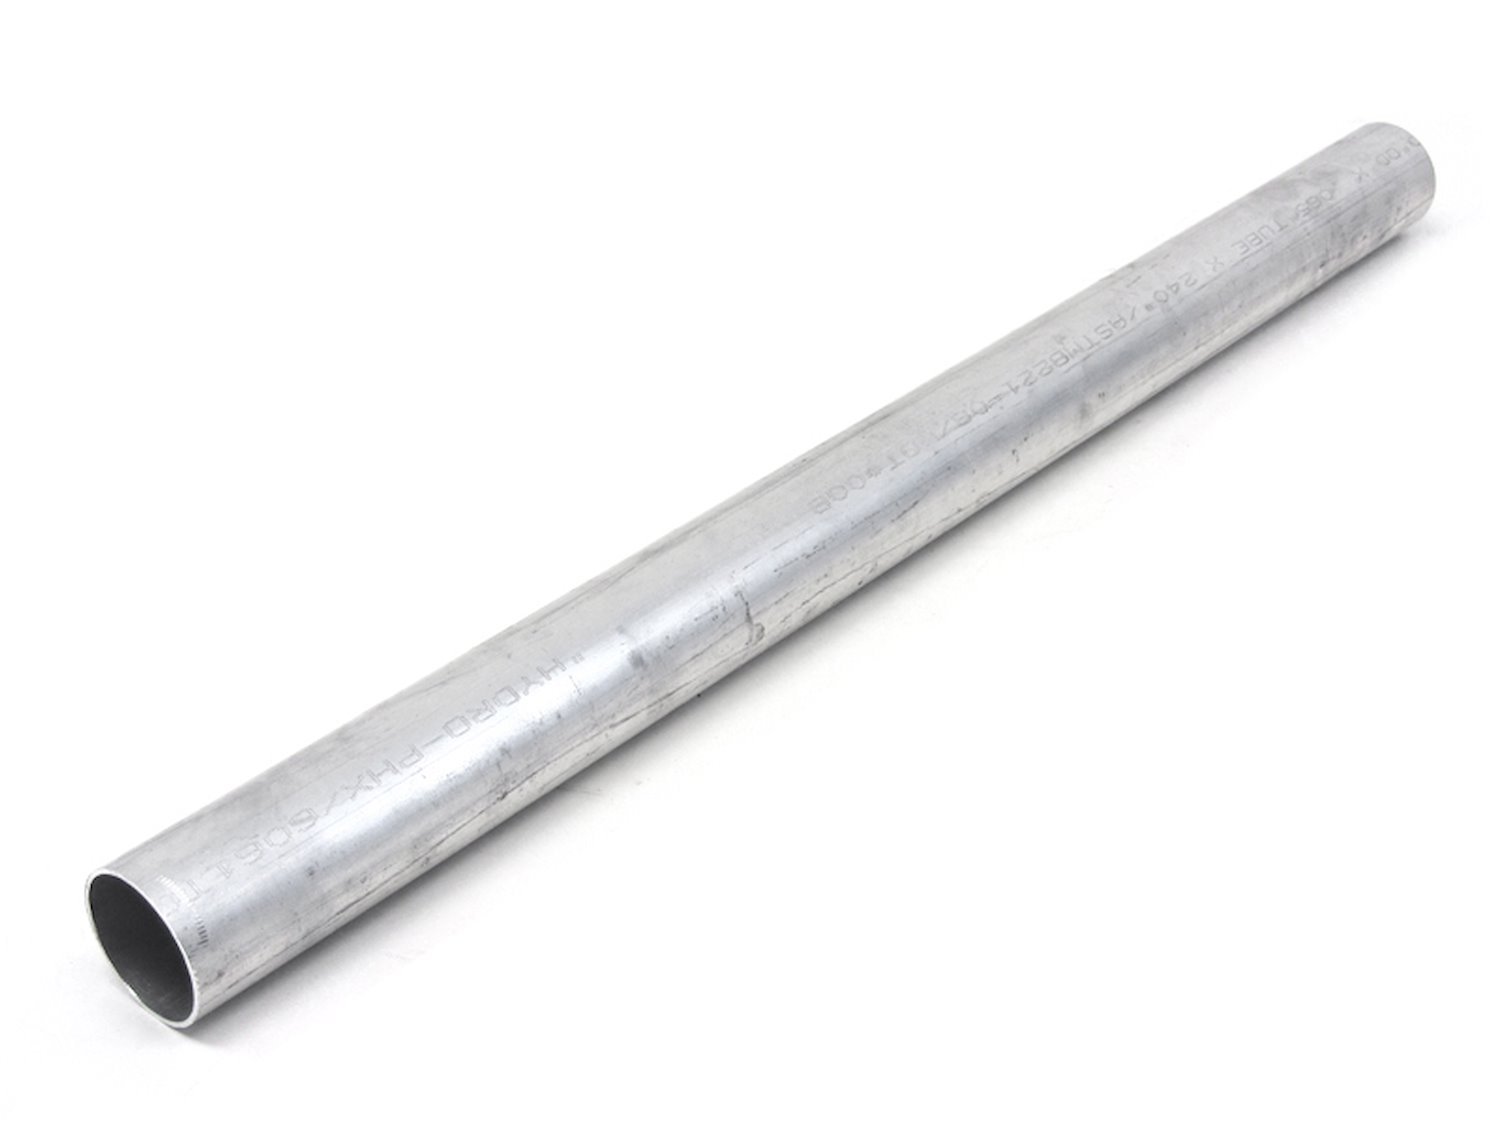 AST-2F-138 Aluminum Tubing, 6061 Aluminum, Straight Tubing, 1-3/8 in. OD, Seamless, Raw Finish, 2 ft. Long